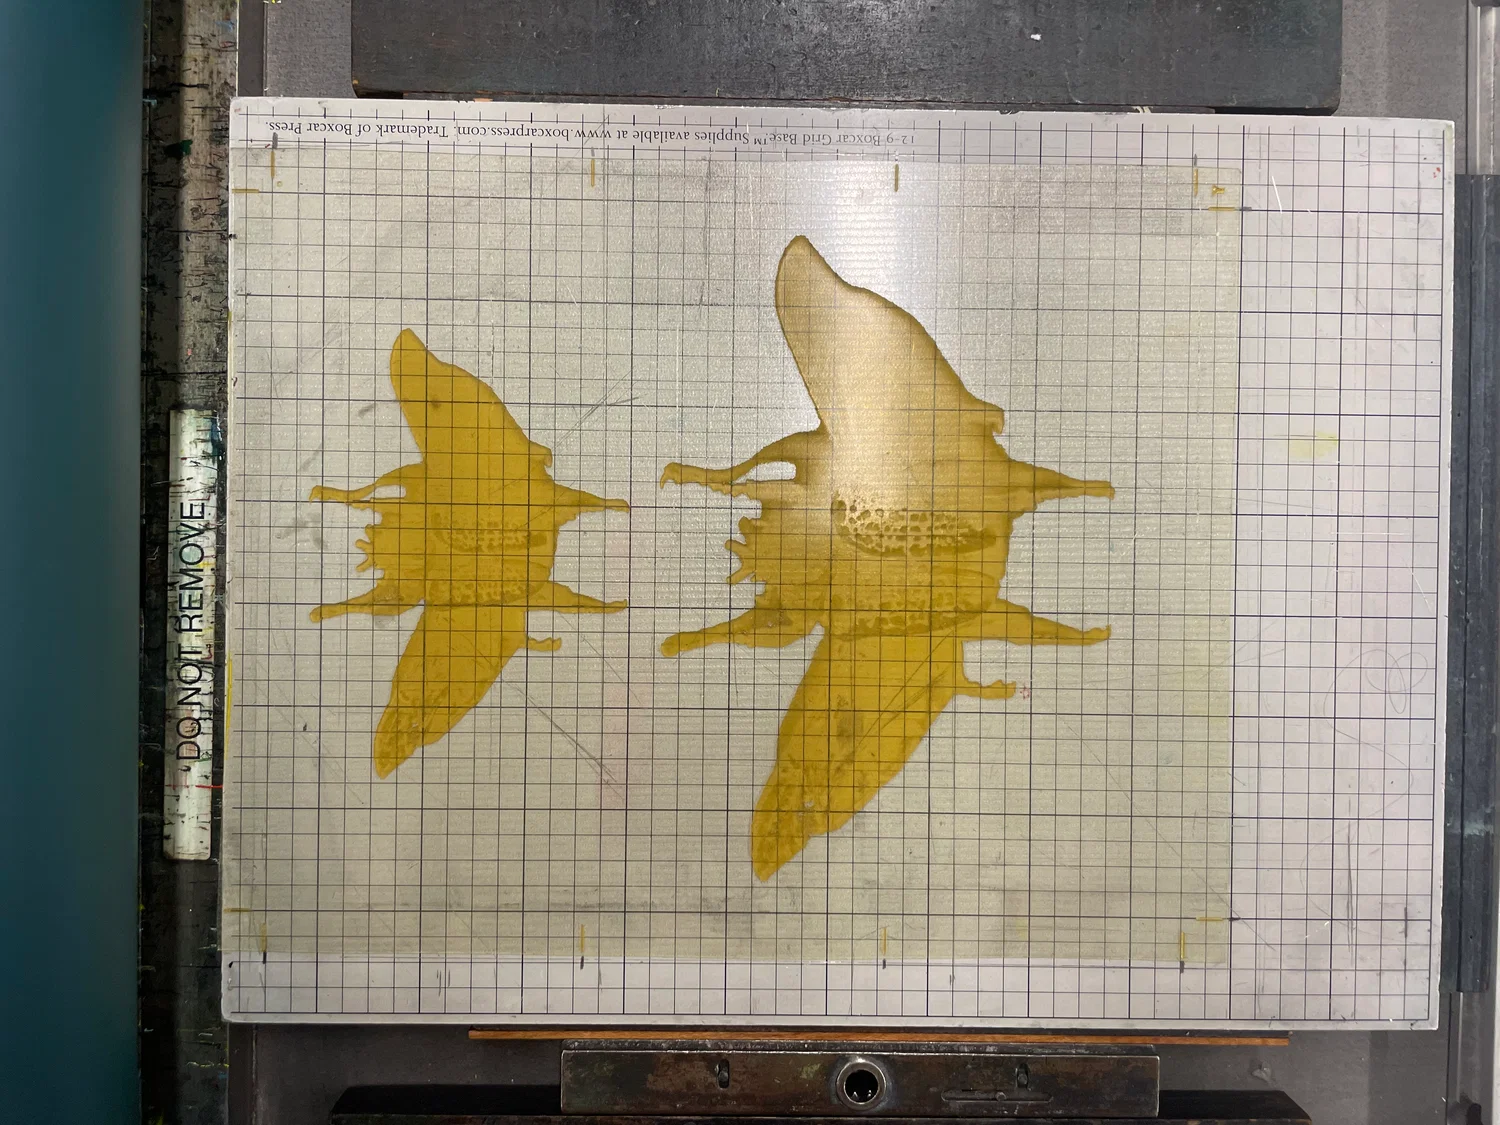 Polymer plate on the letterpress